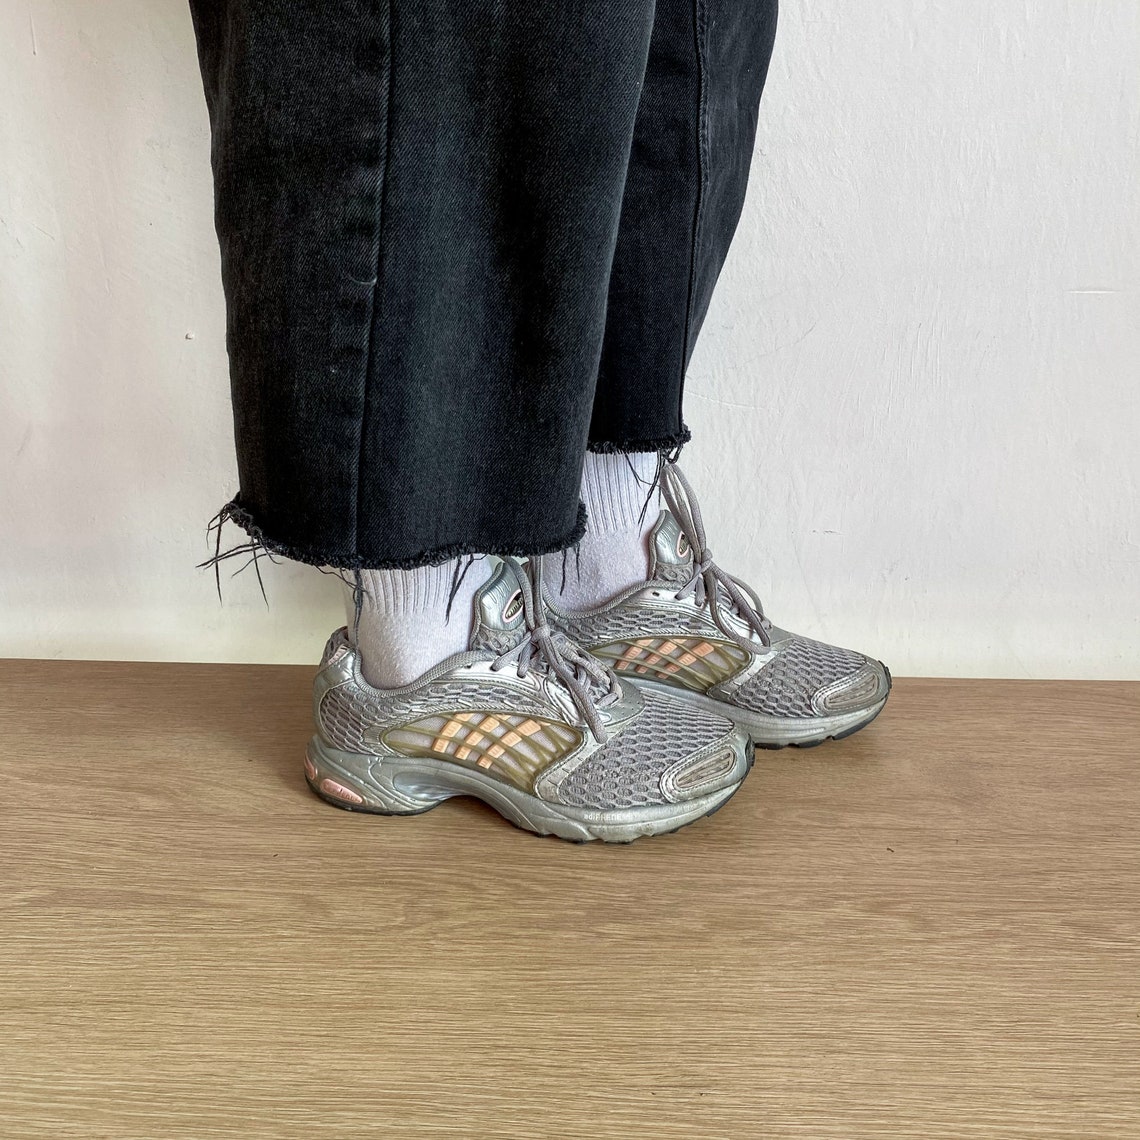 Adidas vintage ugly sneakers in grey | Etsy